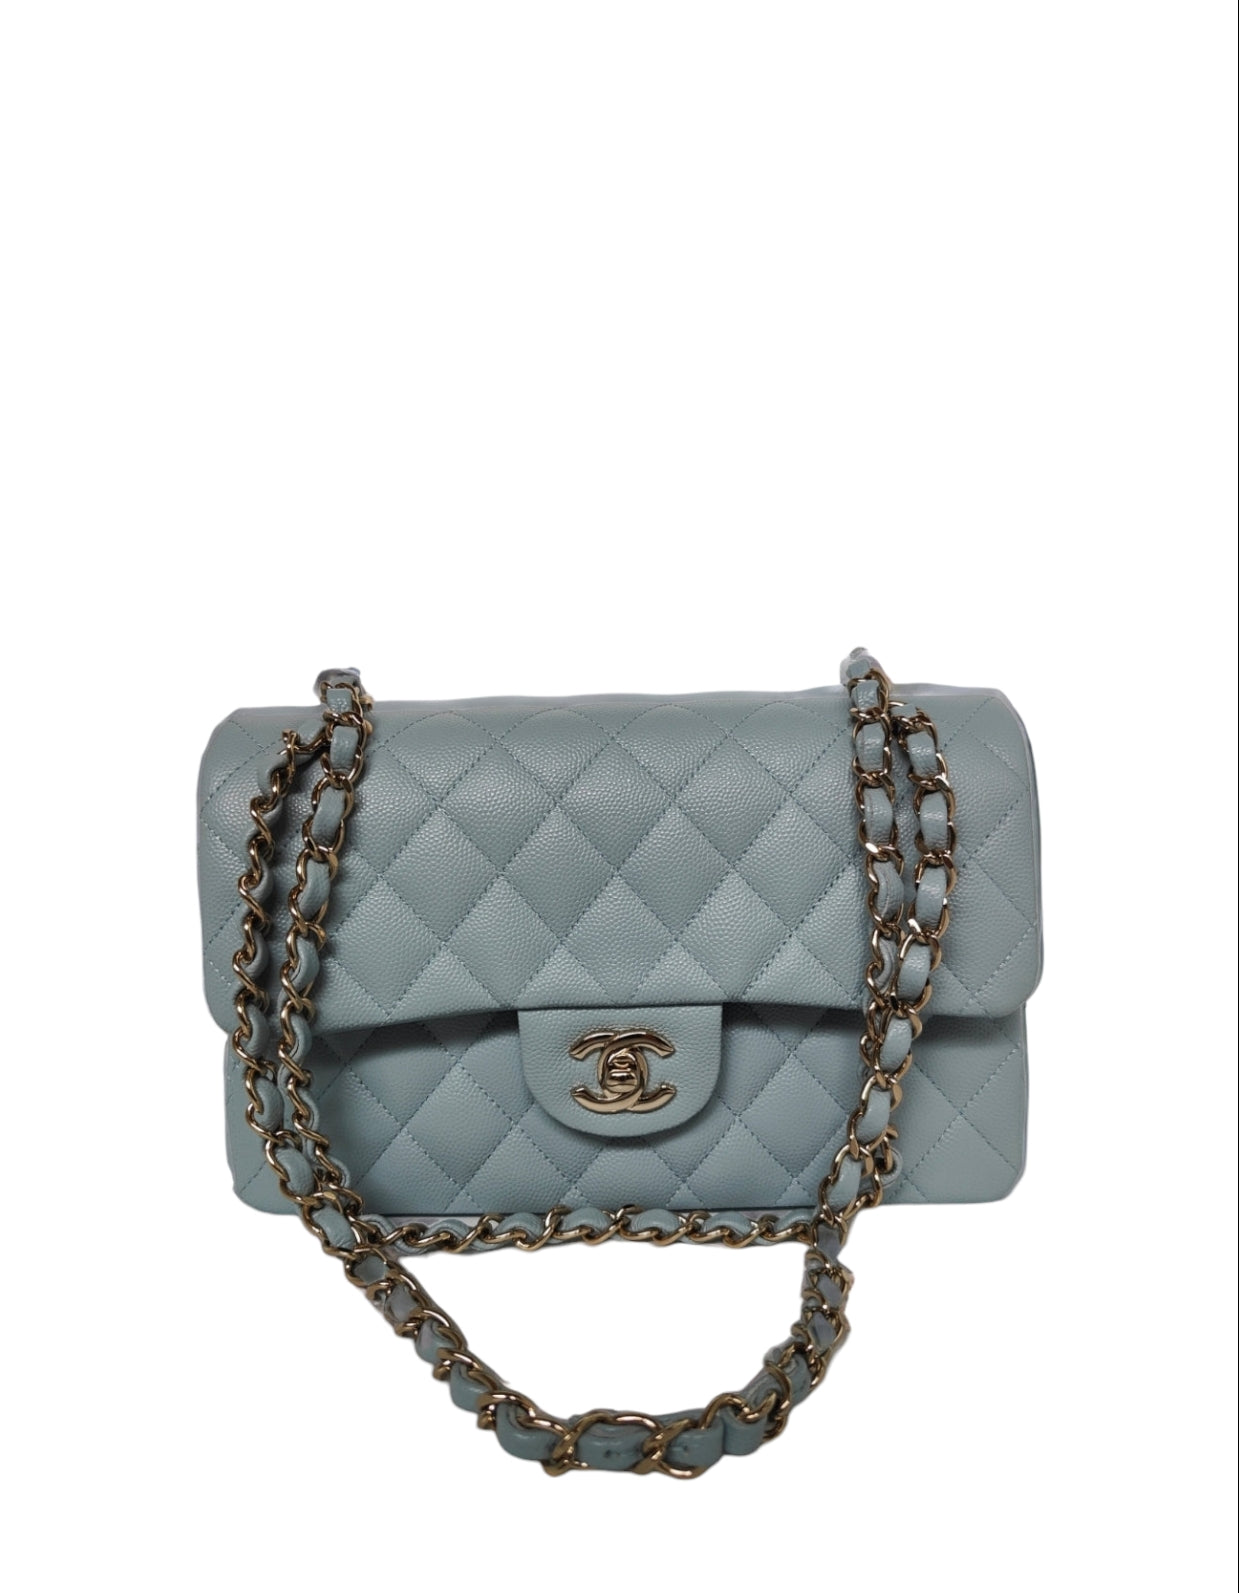 22p Chanel Medium Classic Double Flap Bag Light Blue Caviar